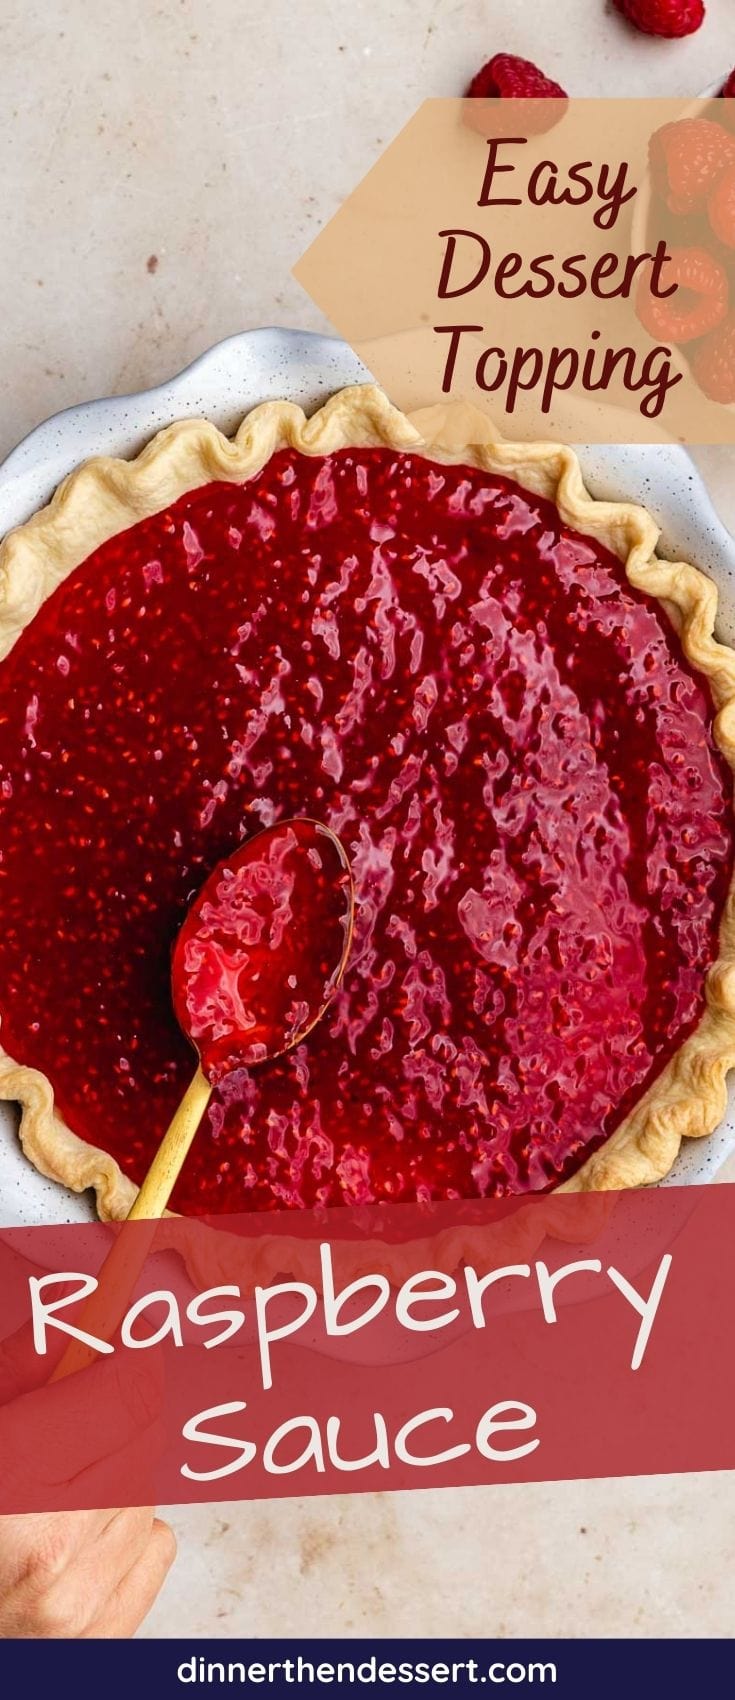 Raspberry Sauce spread on pie with spoon, recipe name across bottom